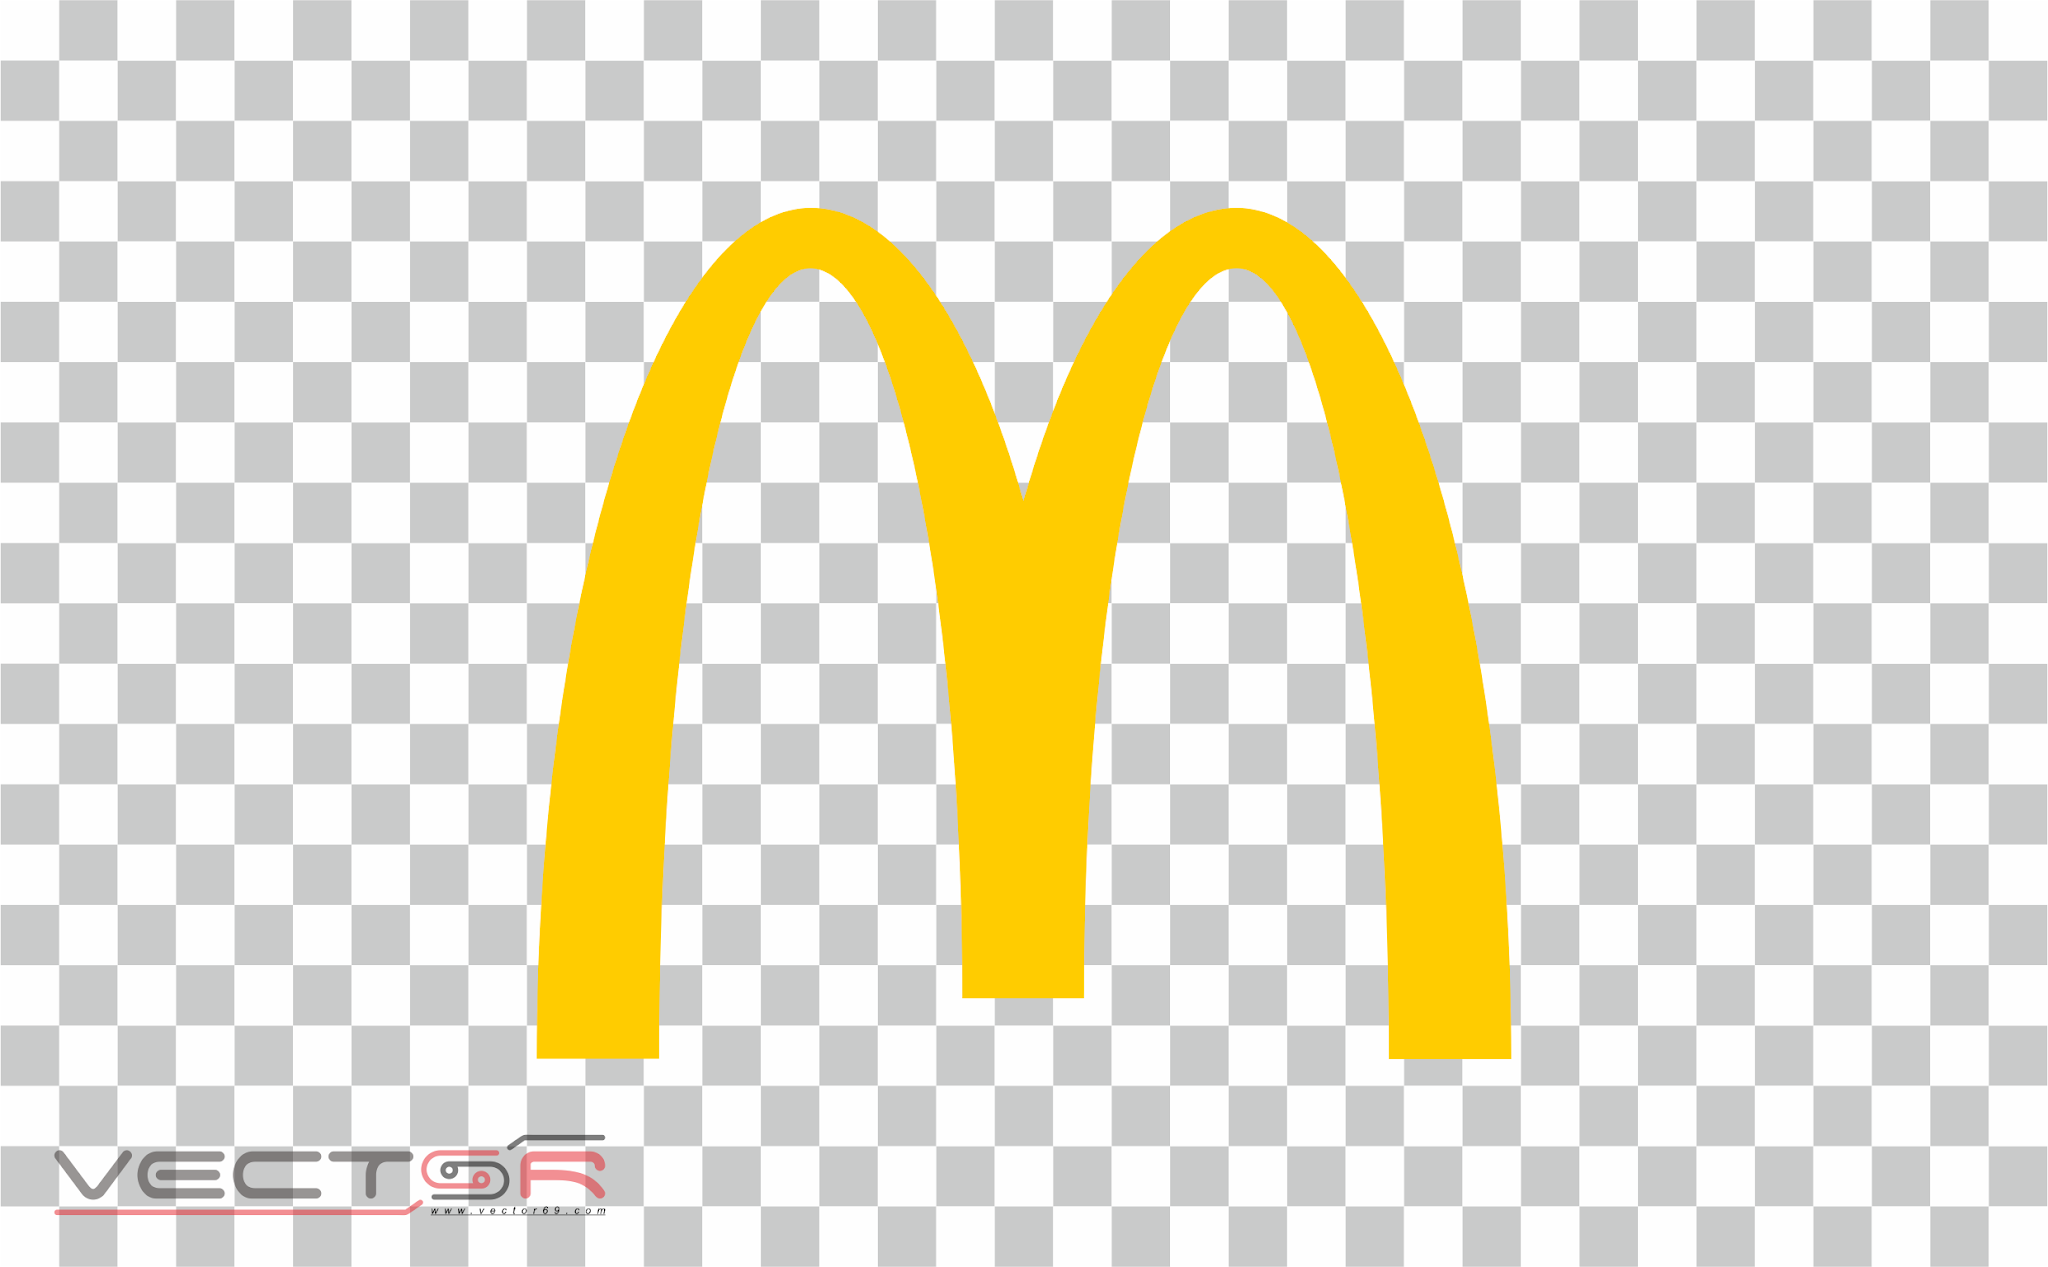 McDonald's Logo - Download .PNG (Portable Network Graphics) Transparent Images